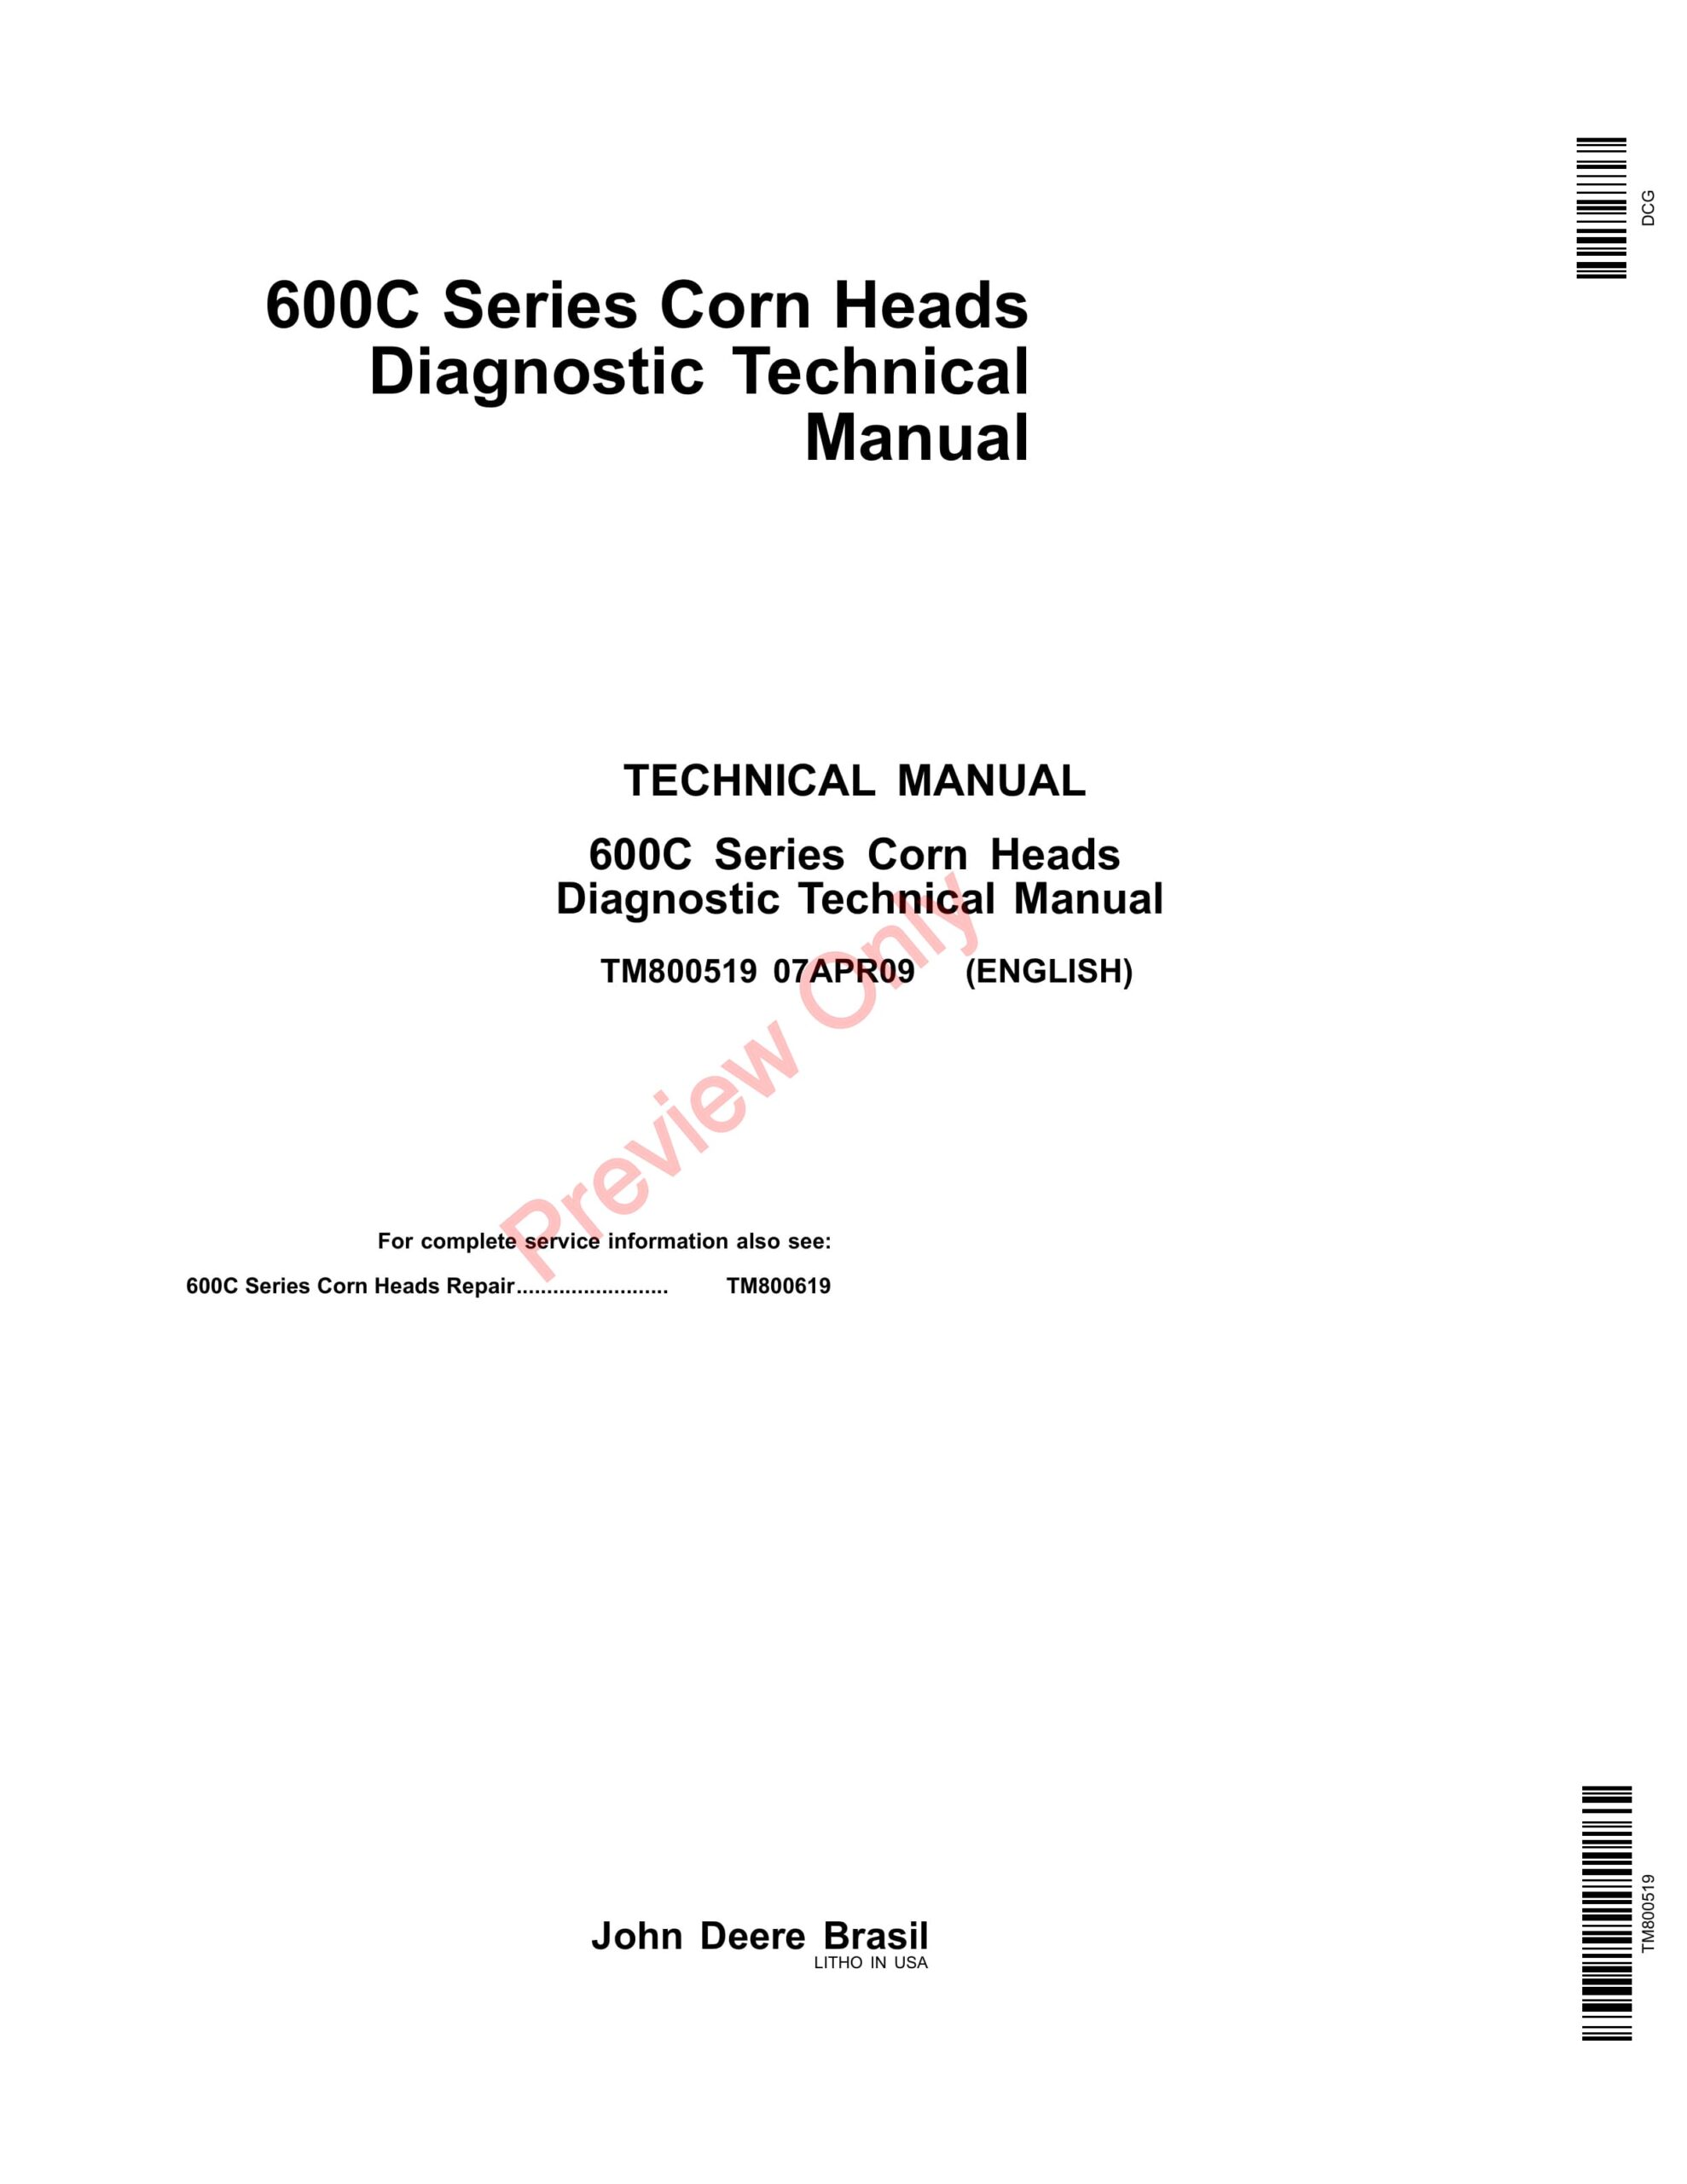 John Deere 600C Series Corn Head Technical Manual TM800519 07APR09-1